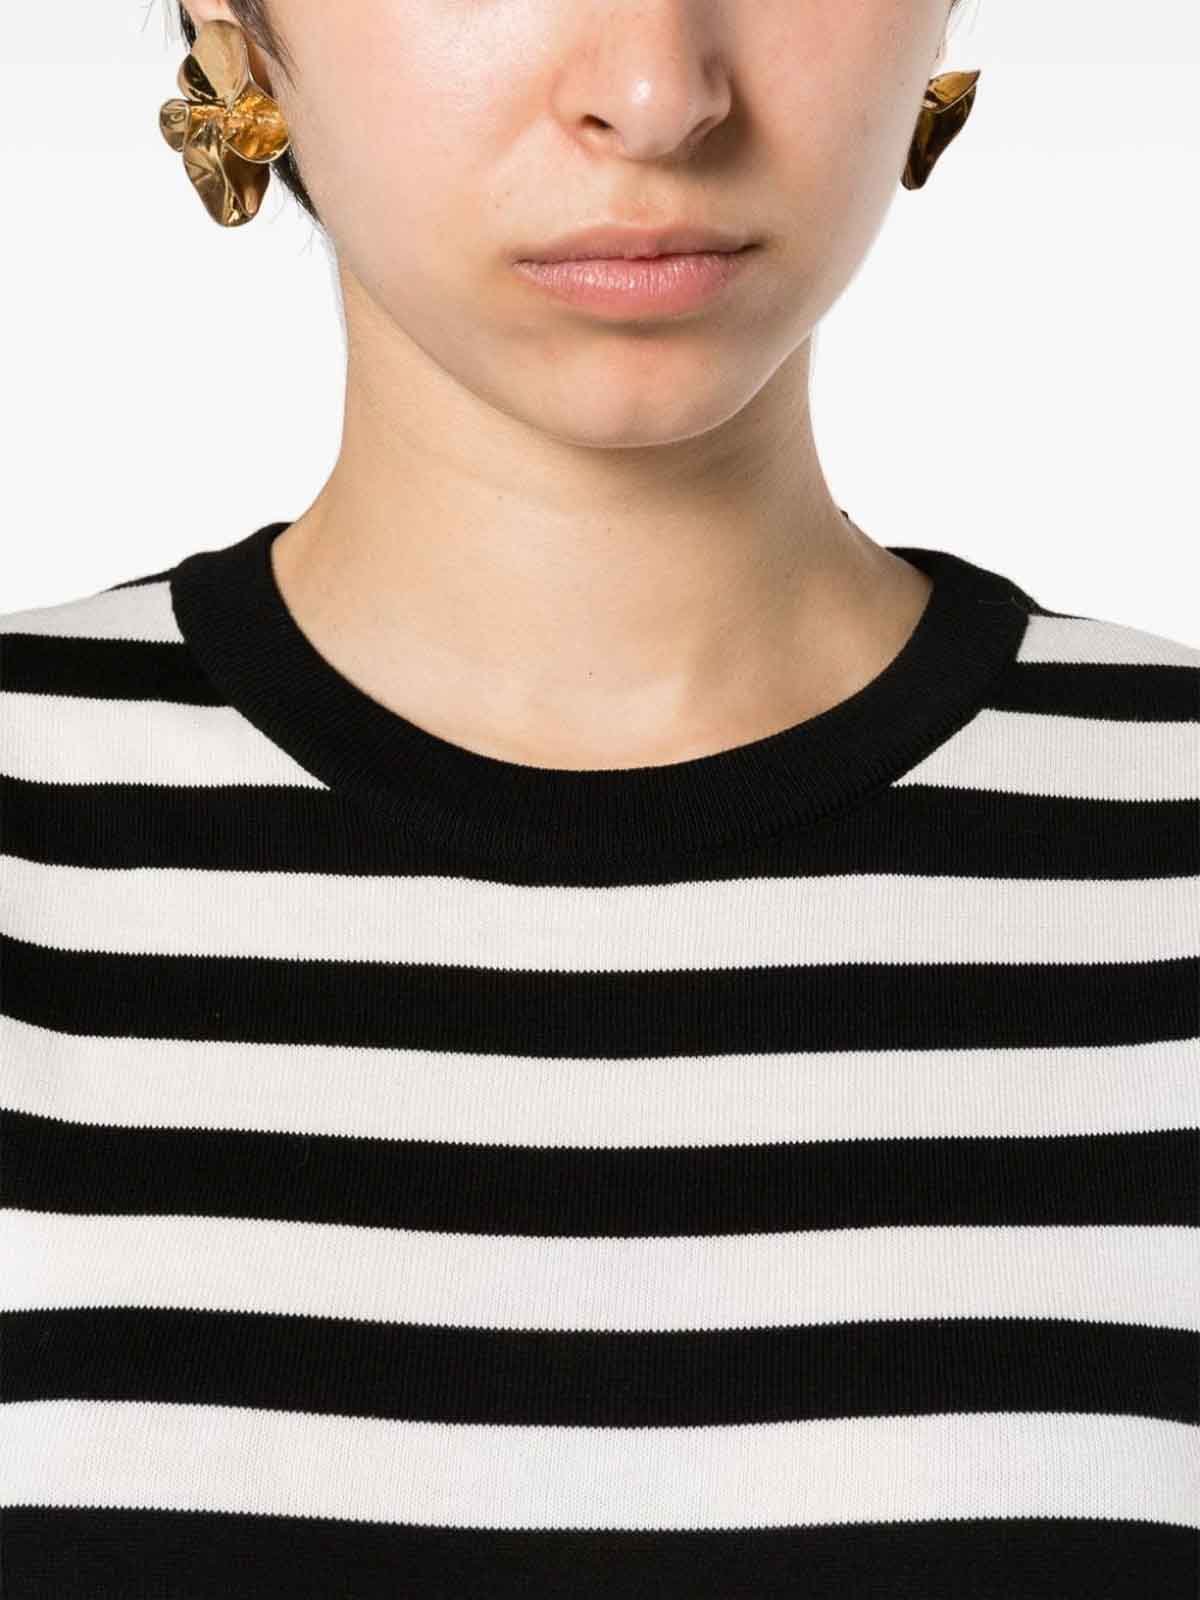 Shop Moschino Camiseta - Negro